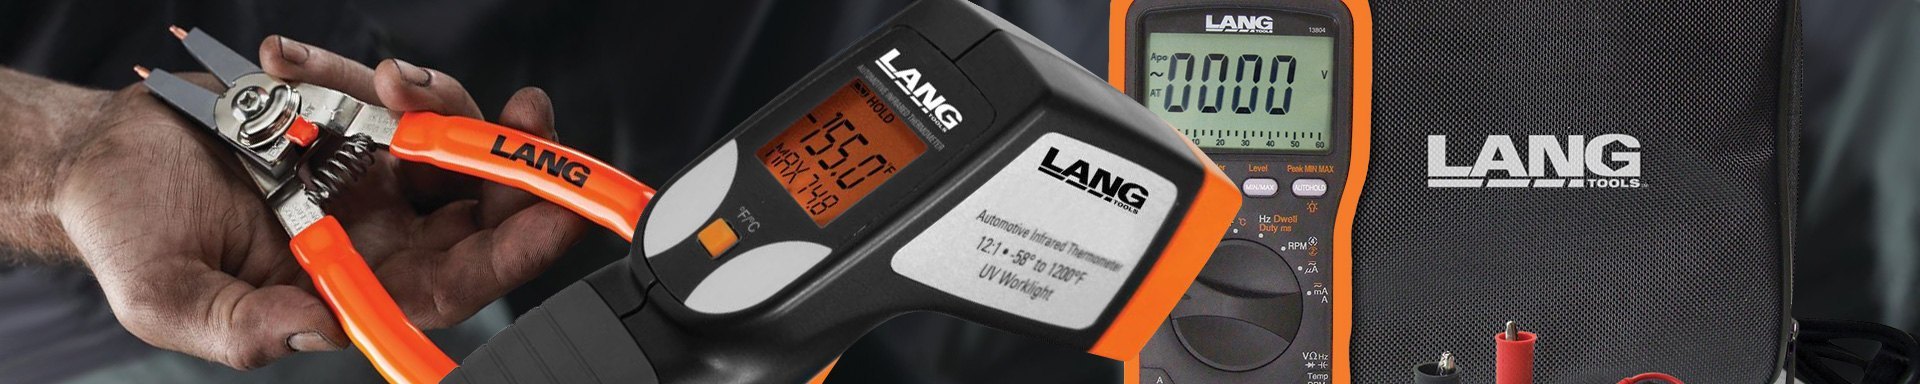 Lang Tools Precision Measuring Tools